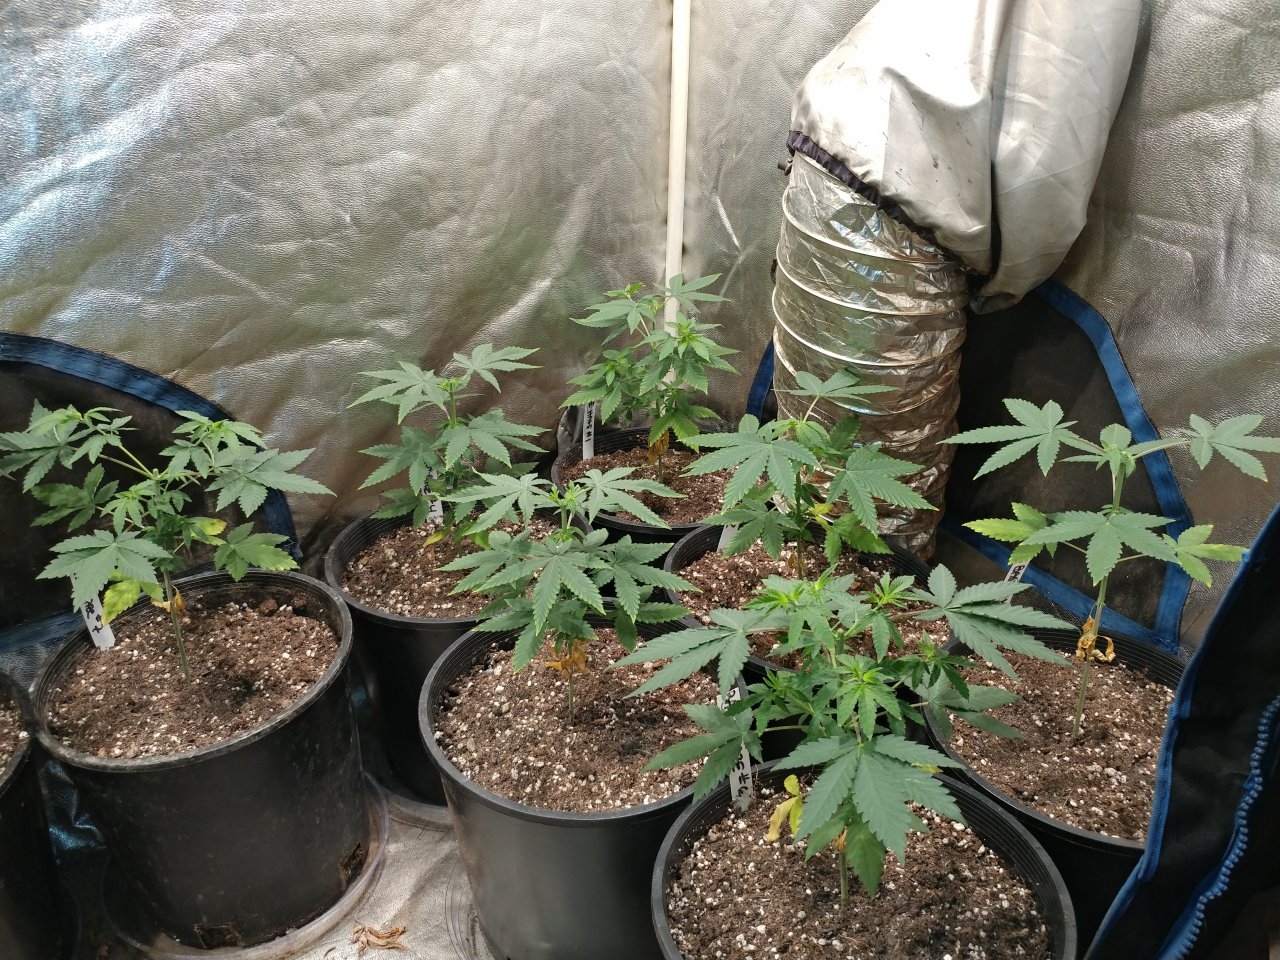 Icemud_Bangi Haze F9_veg_cannabis_seed_led grow light_indoor (1).jpg